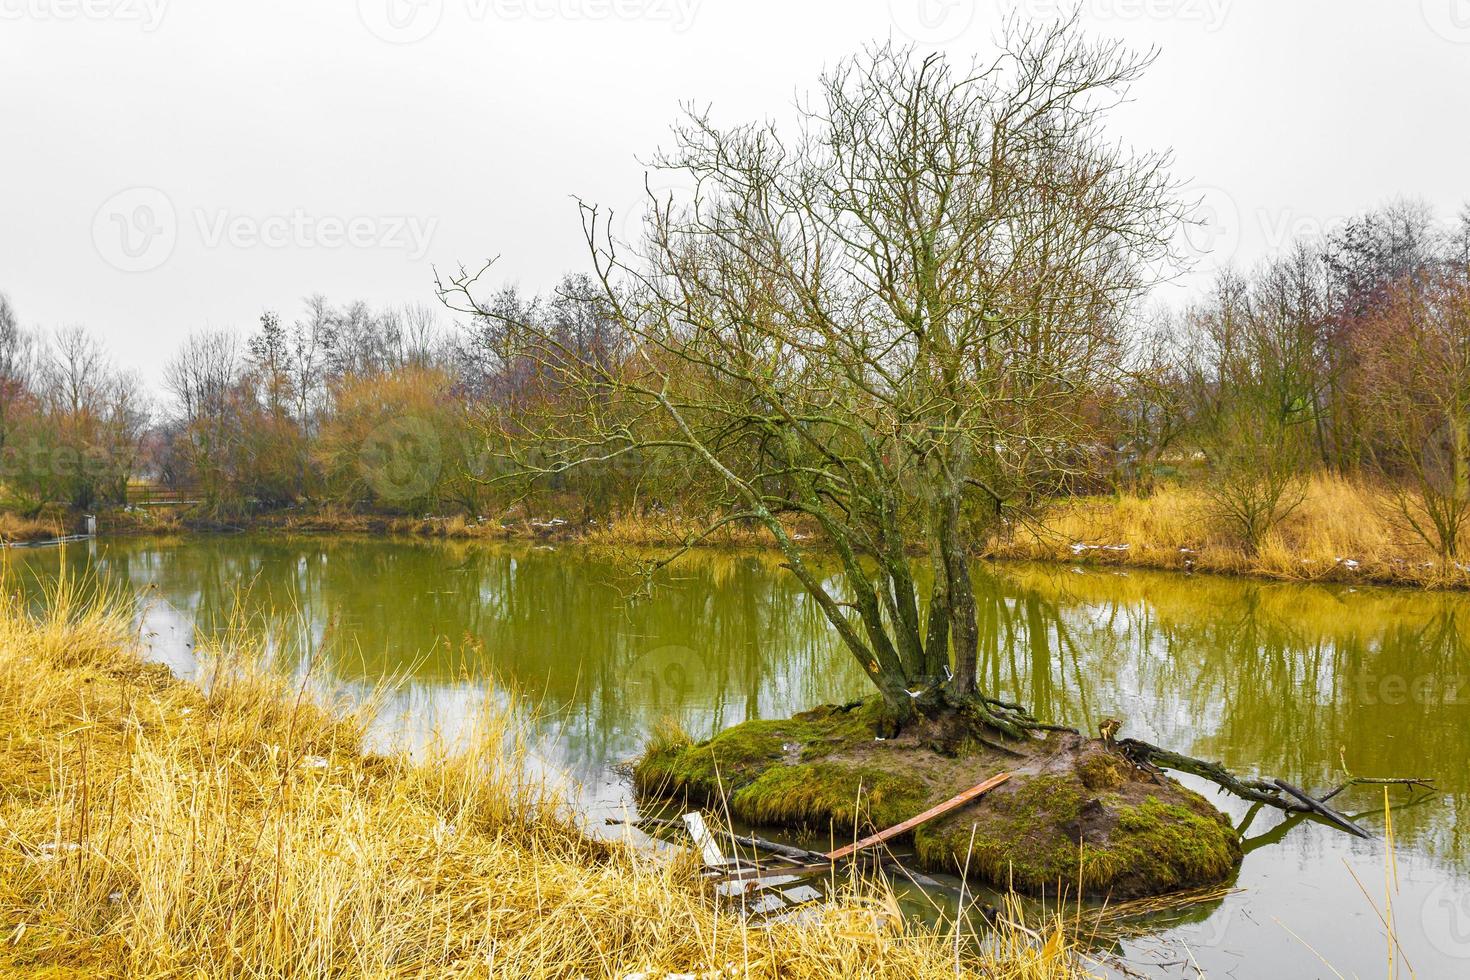 congelados rio fluxo charco lago resfriado natureza florestal enviroment alemanha. foto